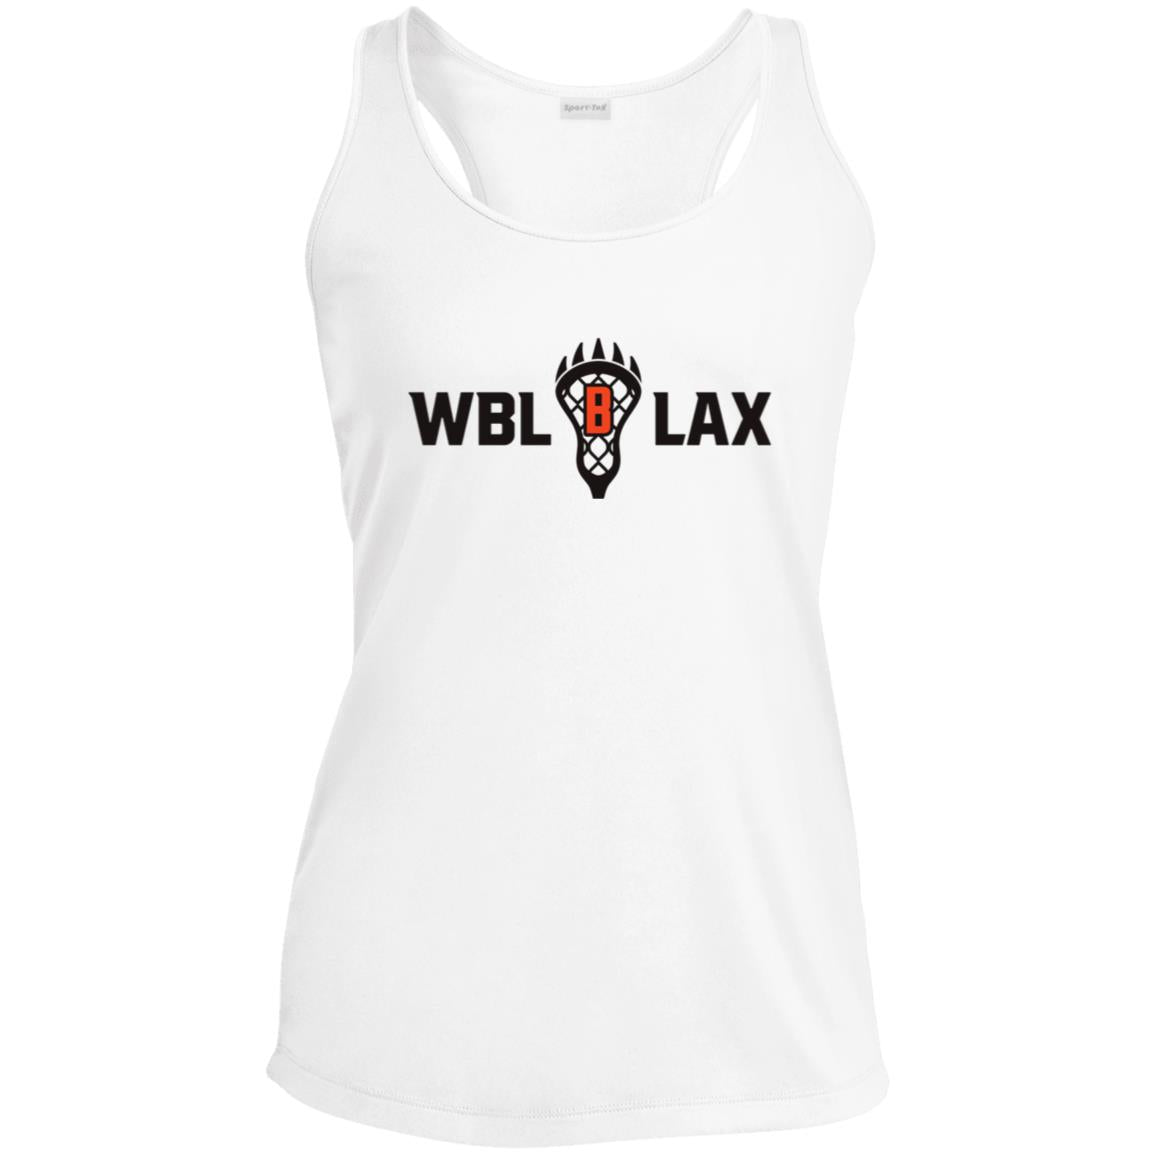 WBLAX Women's Performance Racerback Tank